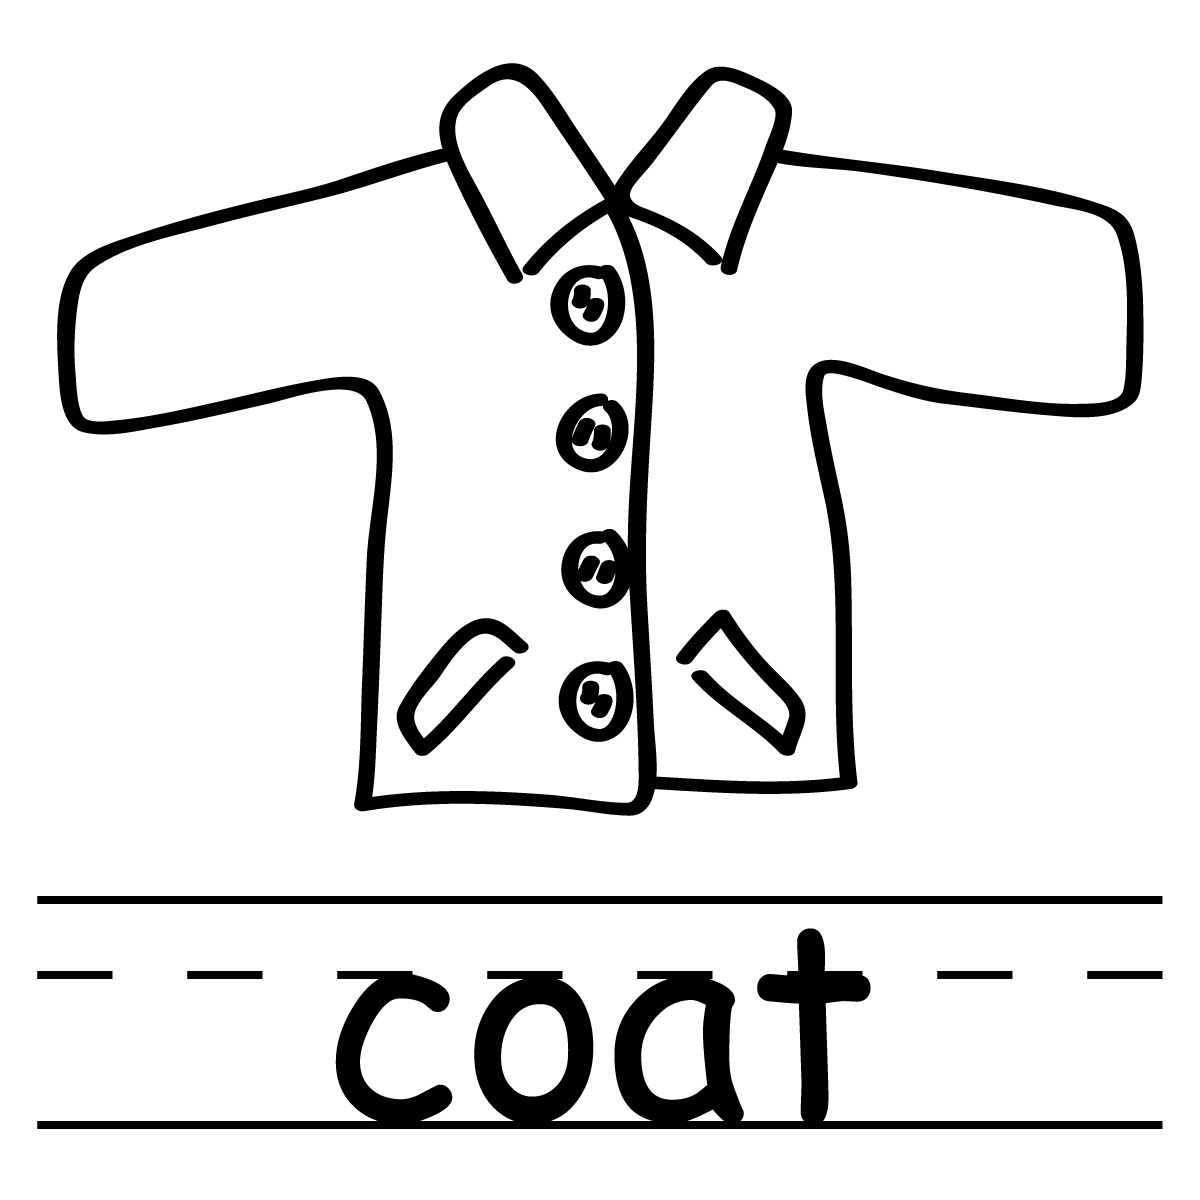 coat clipart c word